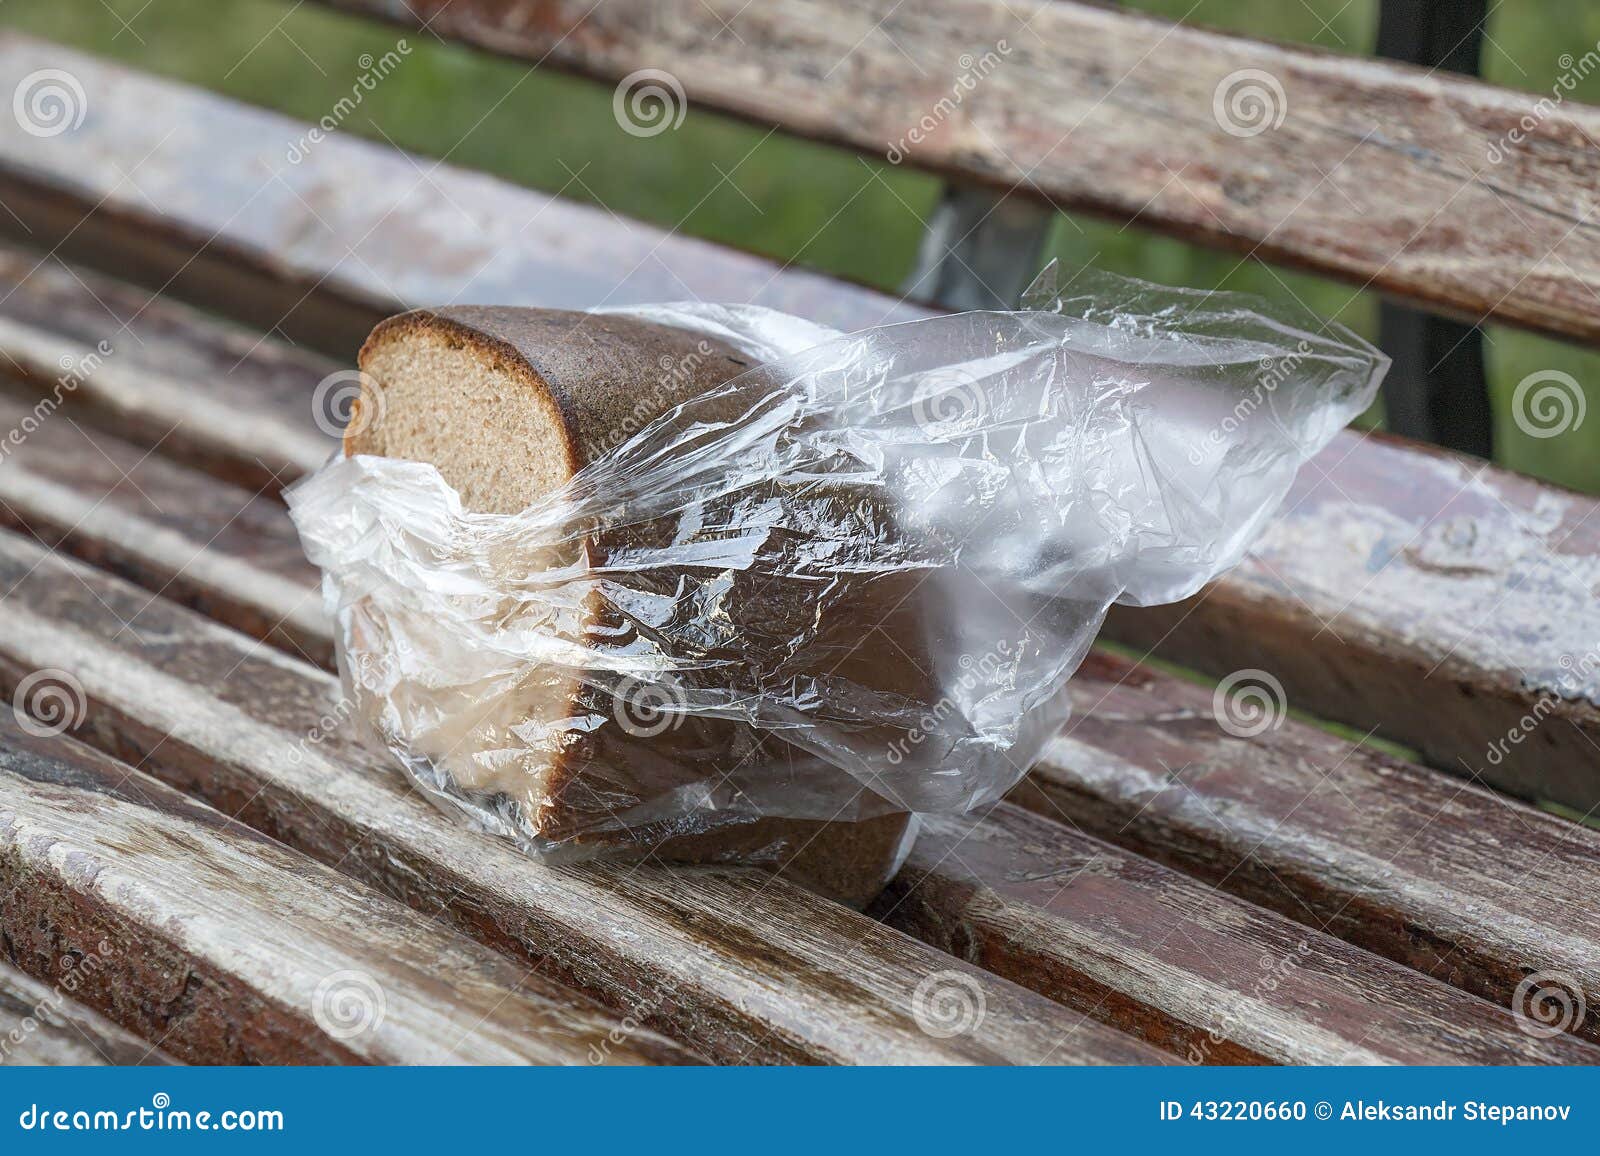 bread-bench-transparent-plastic-bag-forg